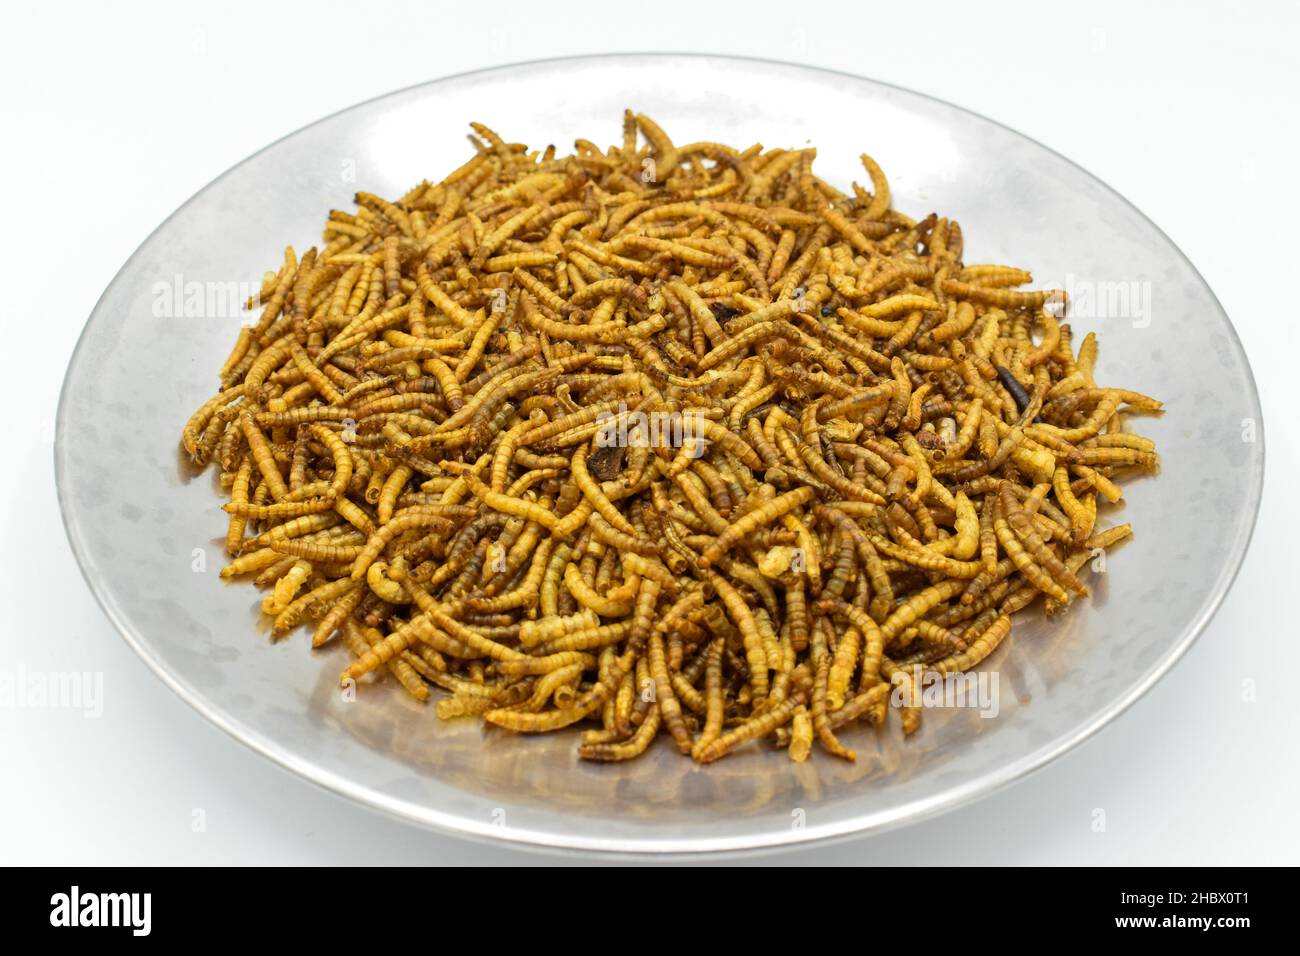 Protyn arowana fish food, dried black soilder fry larvae. Closeup view. Stock Photo